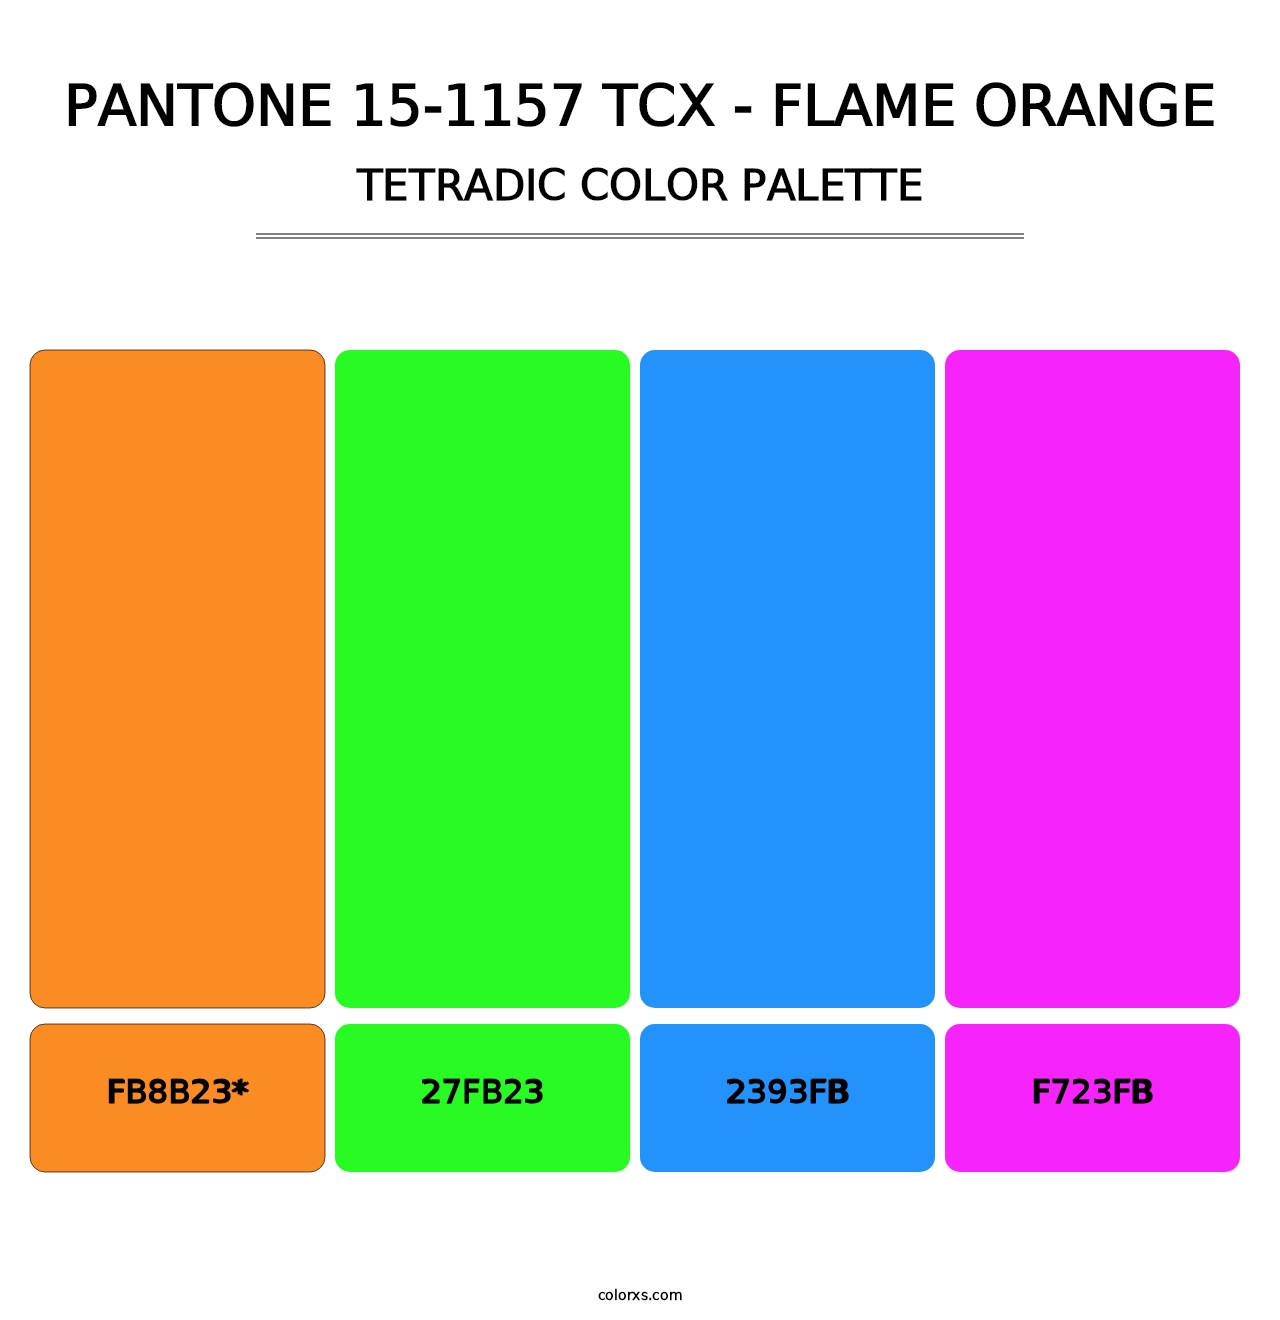 PANTONE 15-1157 TCX - Flame Orange - Tetradic Color Palette